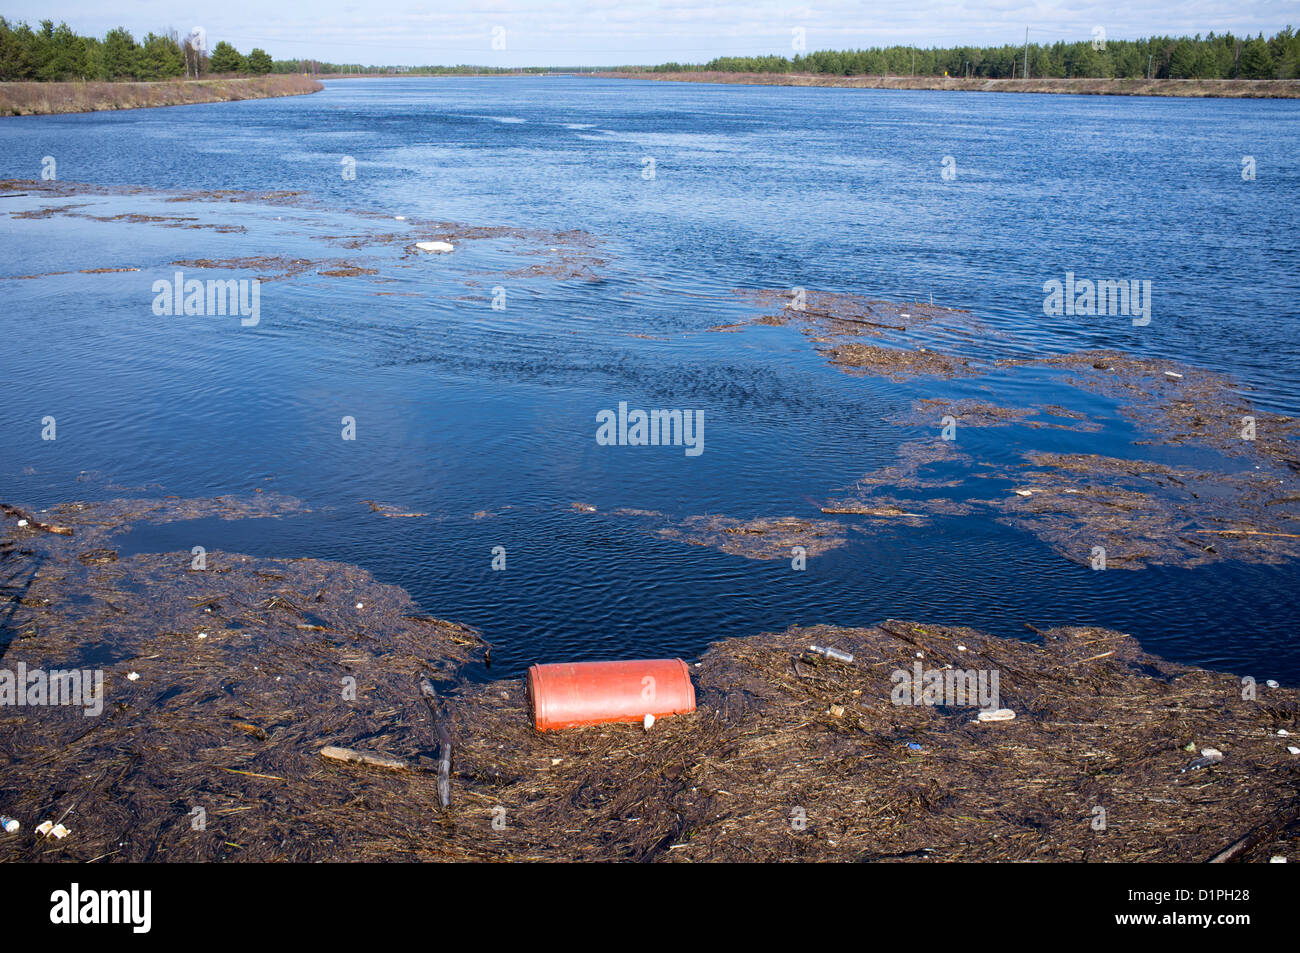 View of floating debris at the water reservoir upstream from Raasakka dam at river Iijoki , Finland Stock Photo